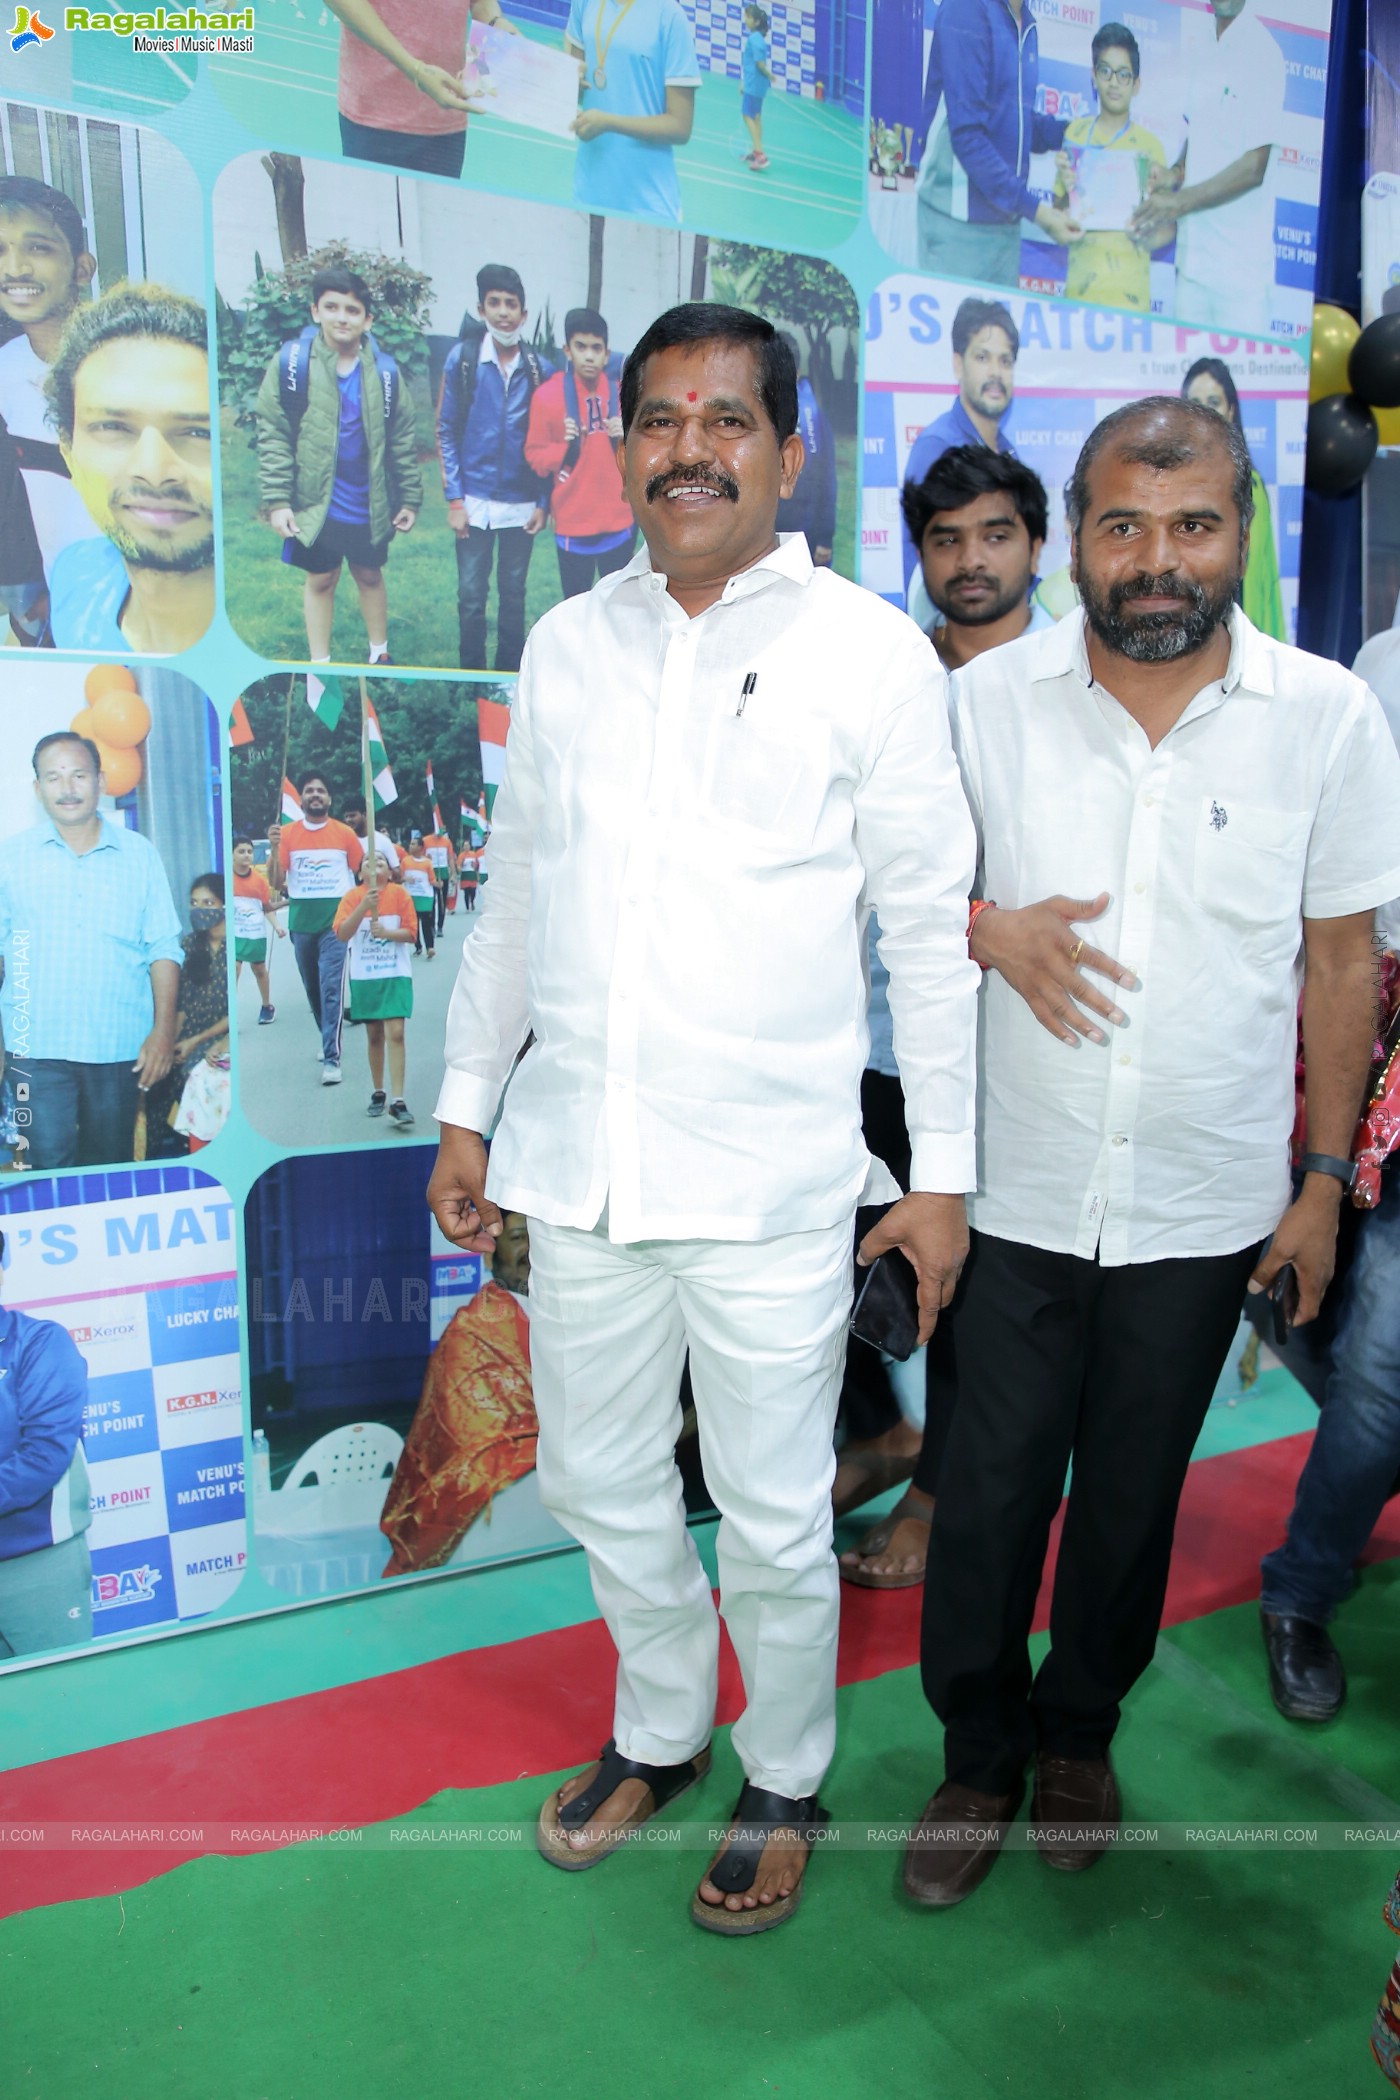 Match Point Badminton Academy Inauguration, Hyderabad 